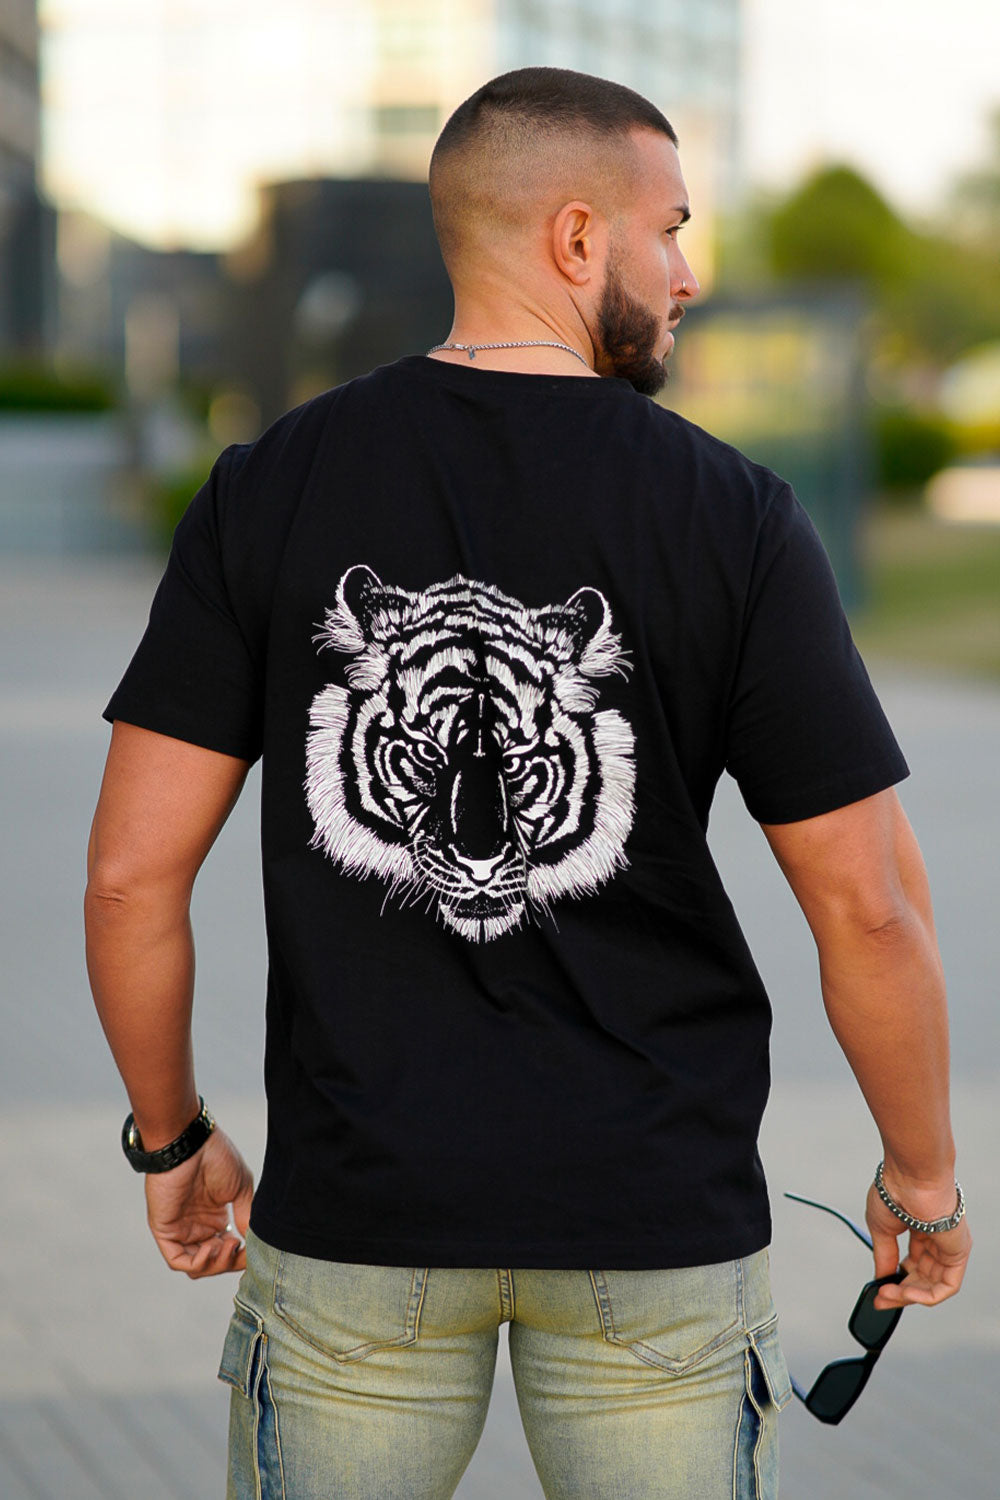 Gingtto Sleek and Simple: Men's Black Round Neck T-Shirt